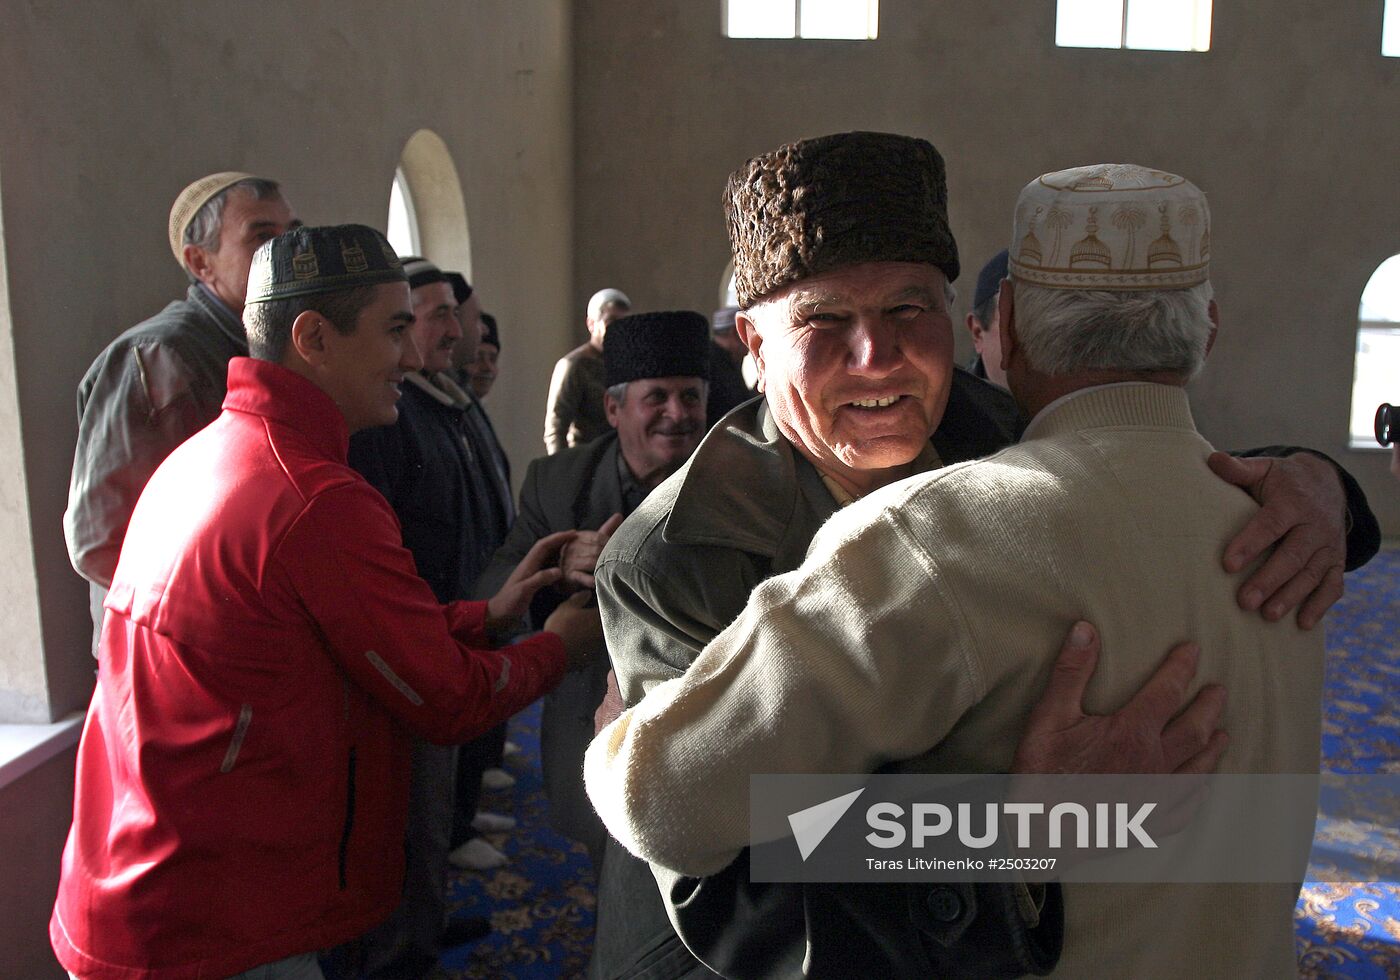 Eid al-Adha celebrations ina new mosque in Crimea